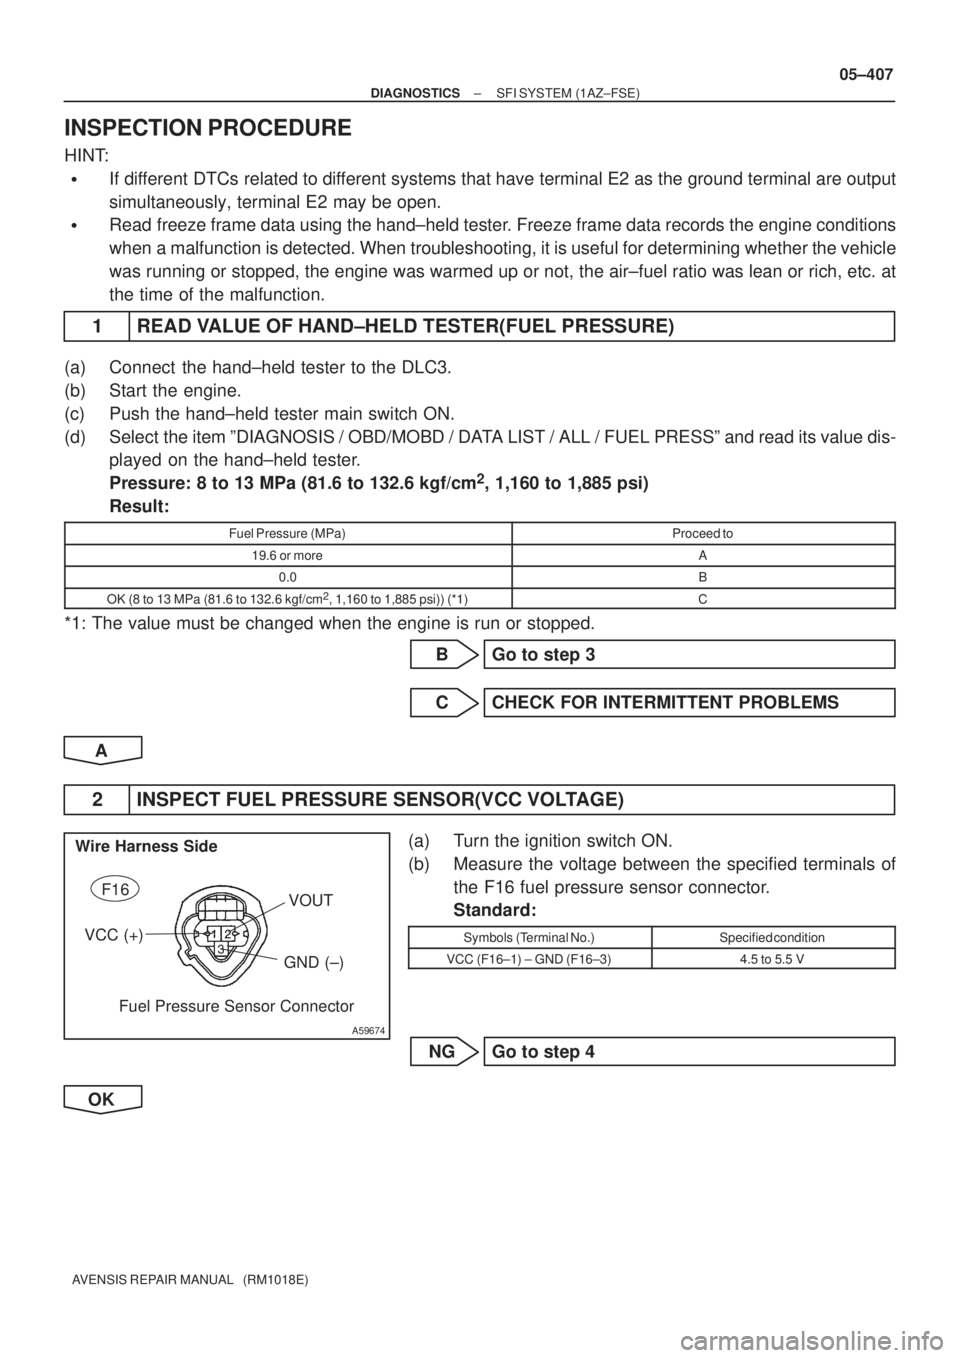 TOYOTA AVENSIS 2005  Service Repair Manual A59674
F16
VCC (+)
GND (±)
Fuel Pressure Sensor Connector Wire Harness Side
VOUT
± DIAGNOSTICSSFI SYSTEM (1AZ±FSE)
05±407
AVENSIS REPAIR MANUAL   (RM1018E)
INSPECTION PROCEDURE
HINT:
If different